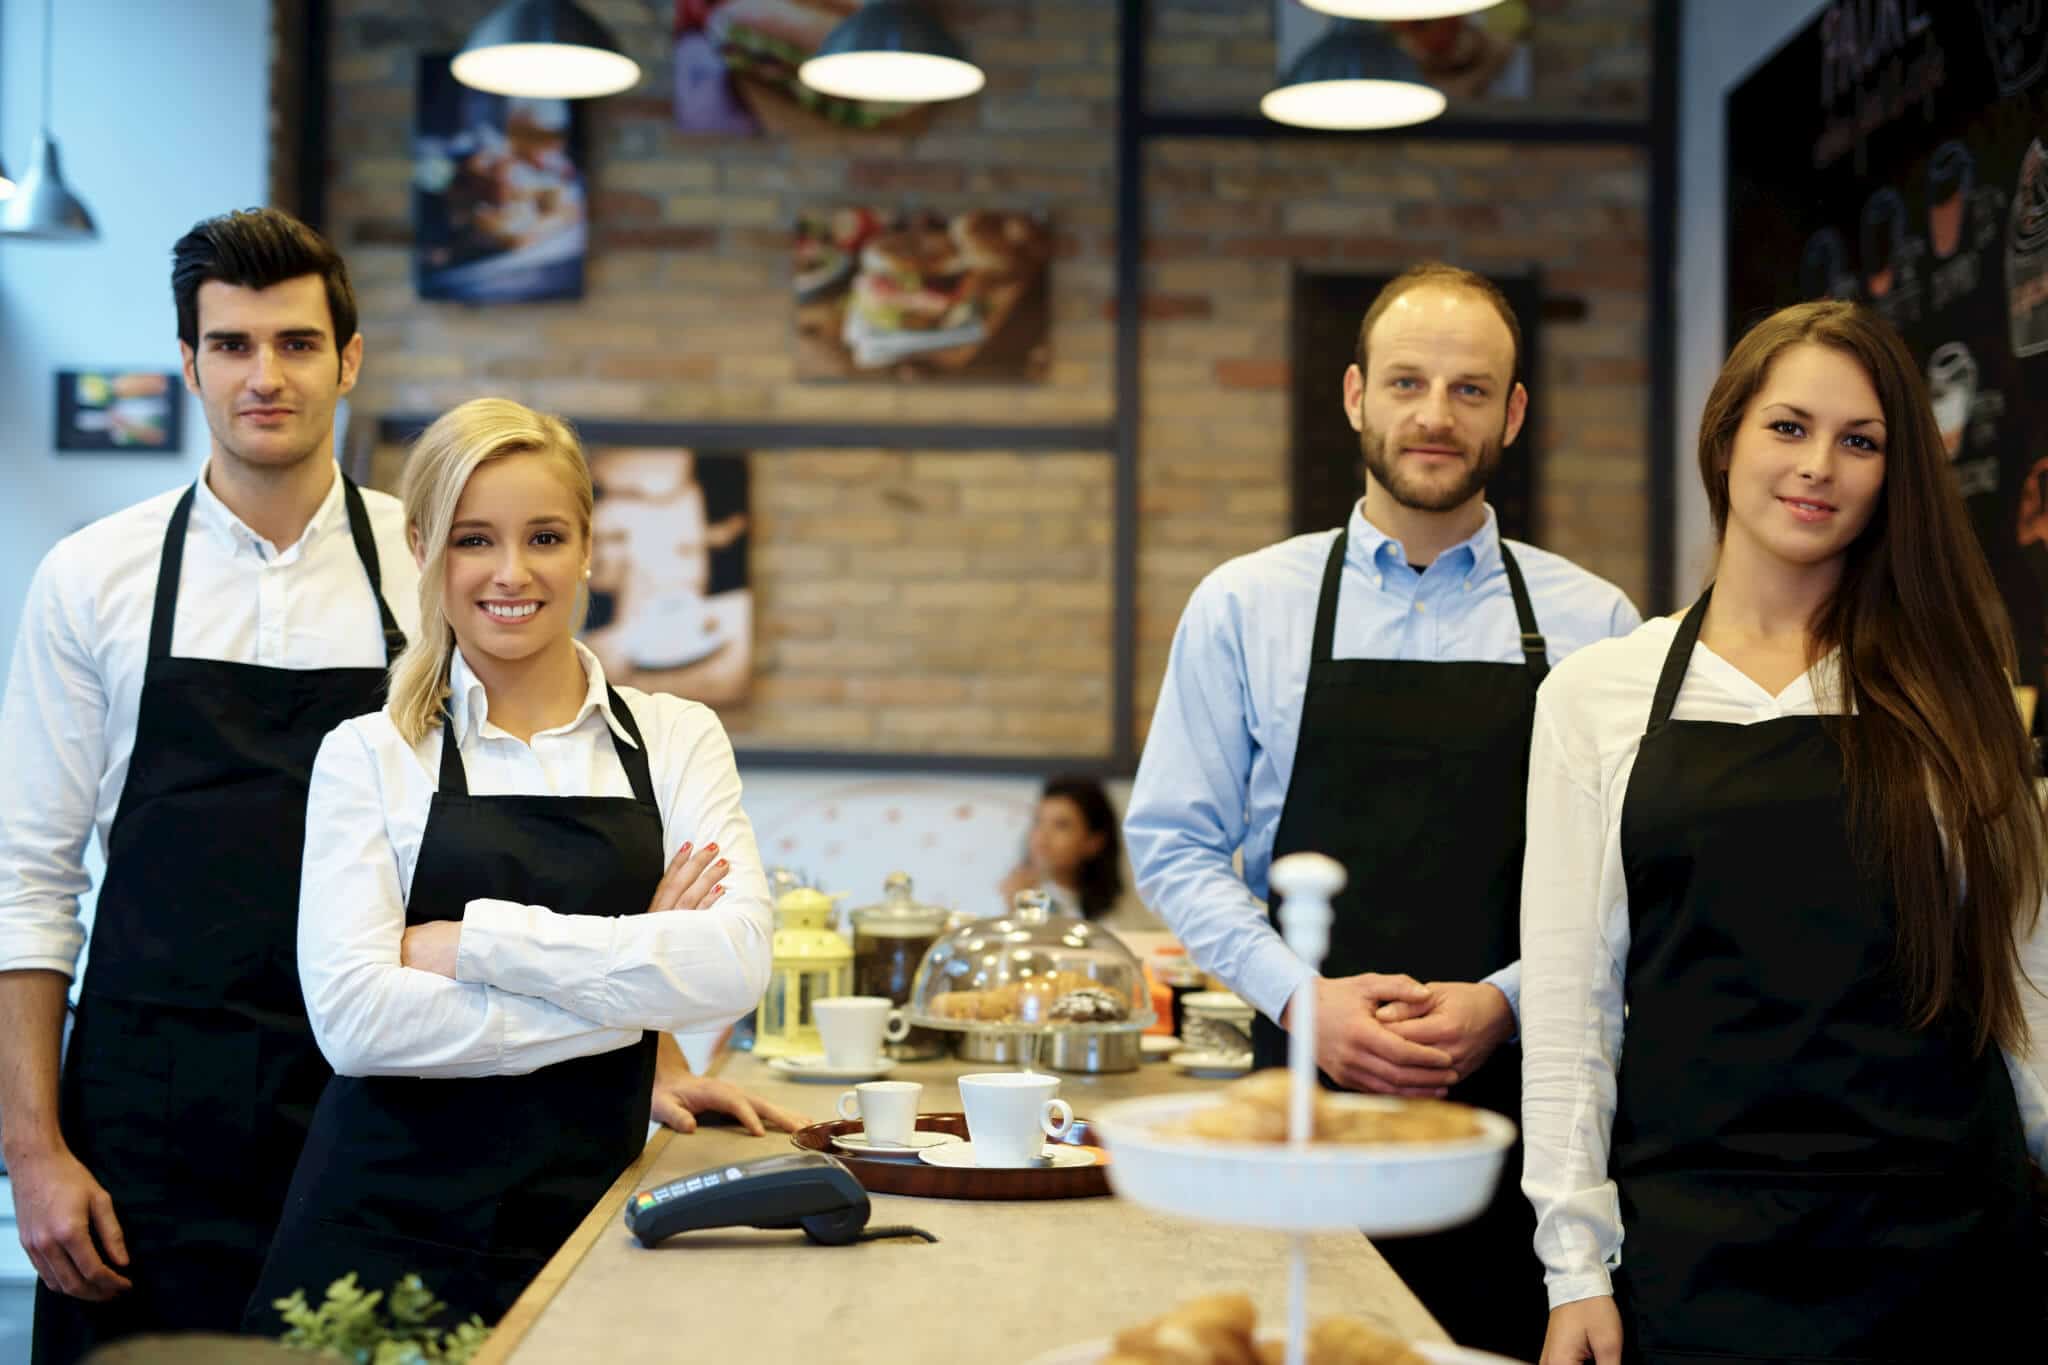 Restaurant Business with Restaurant Management System